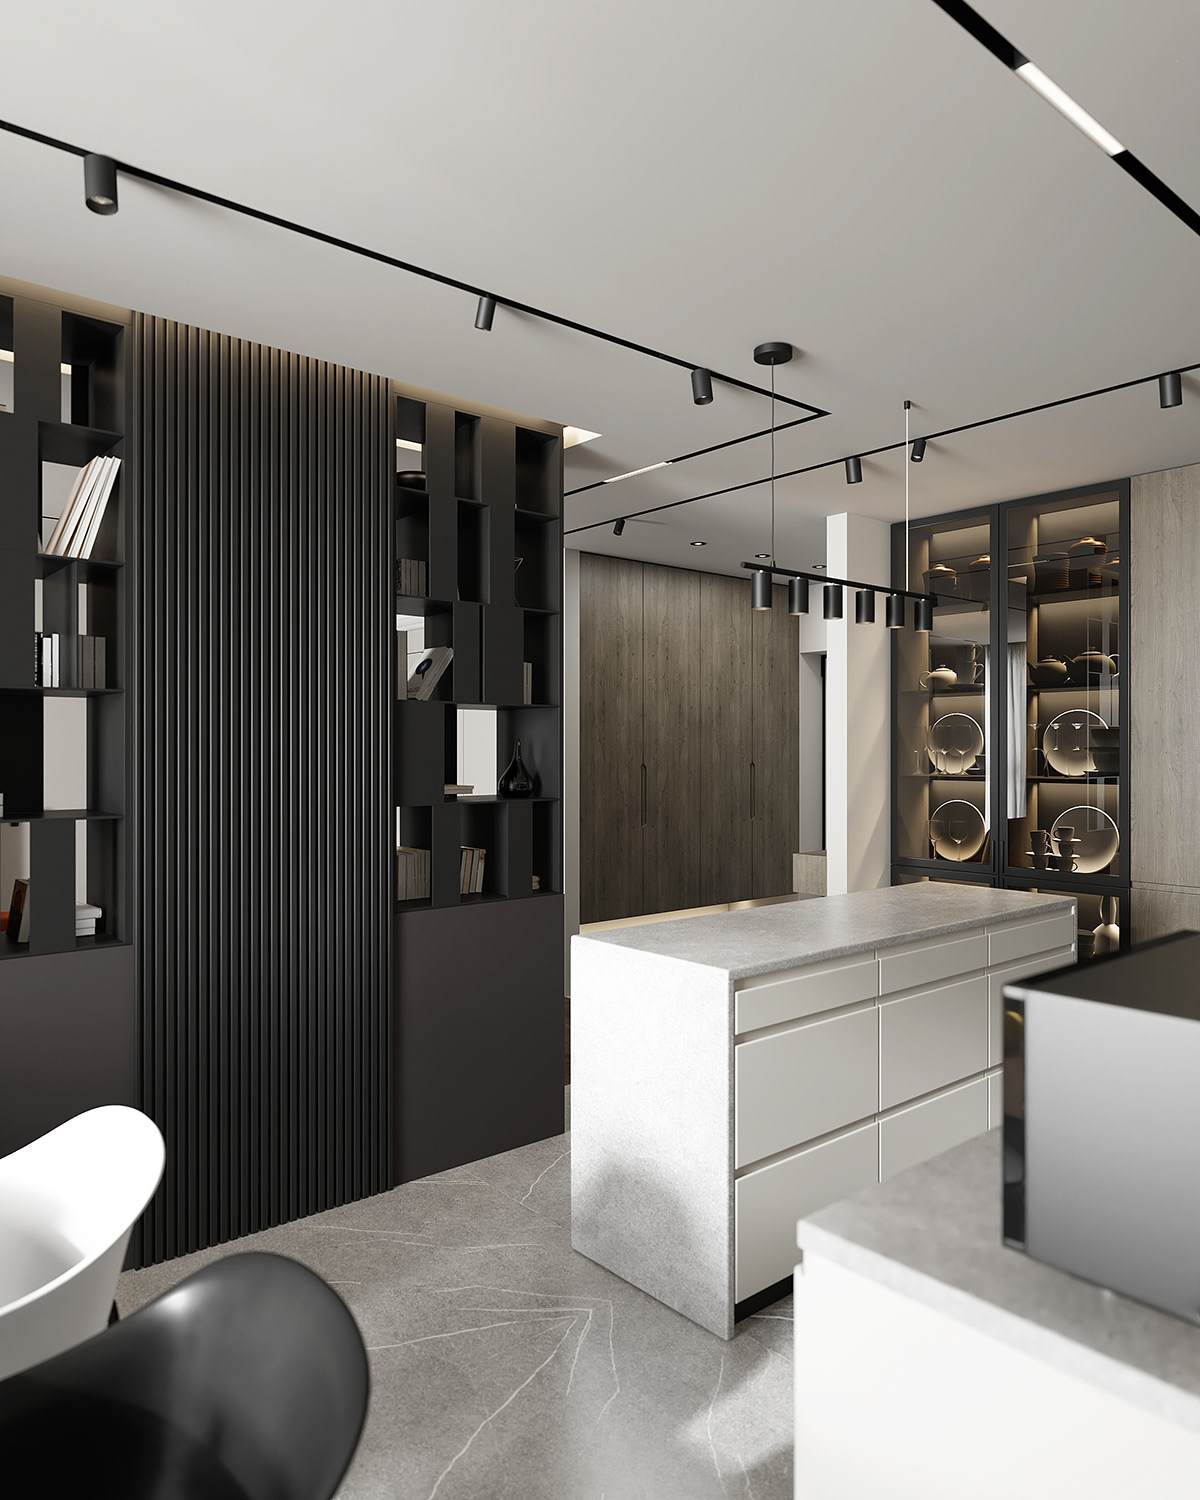 3D 3ds max architecture indoor interior design  modern Photography  Render visualization